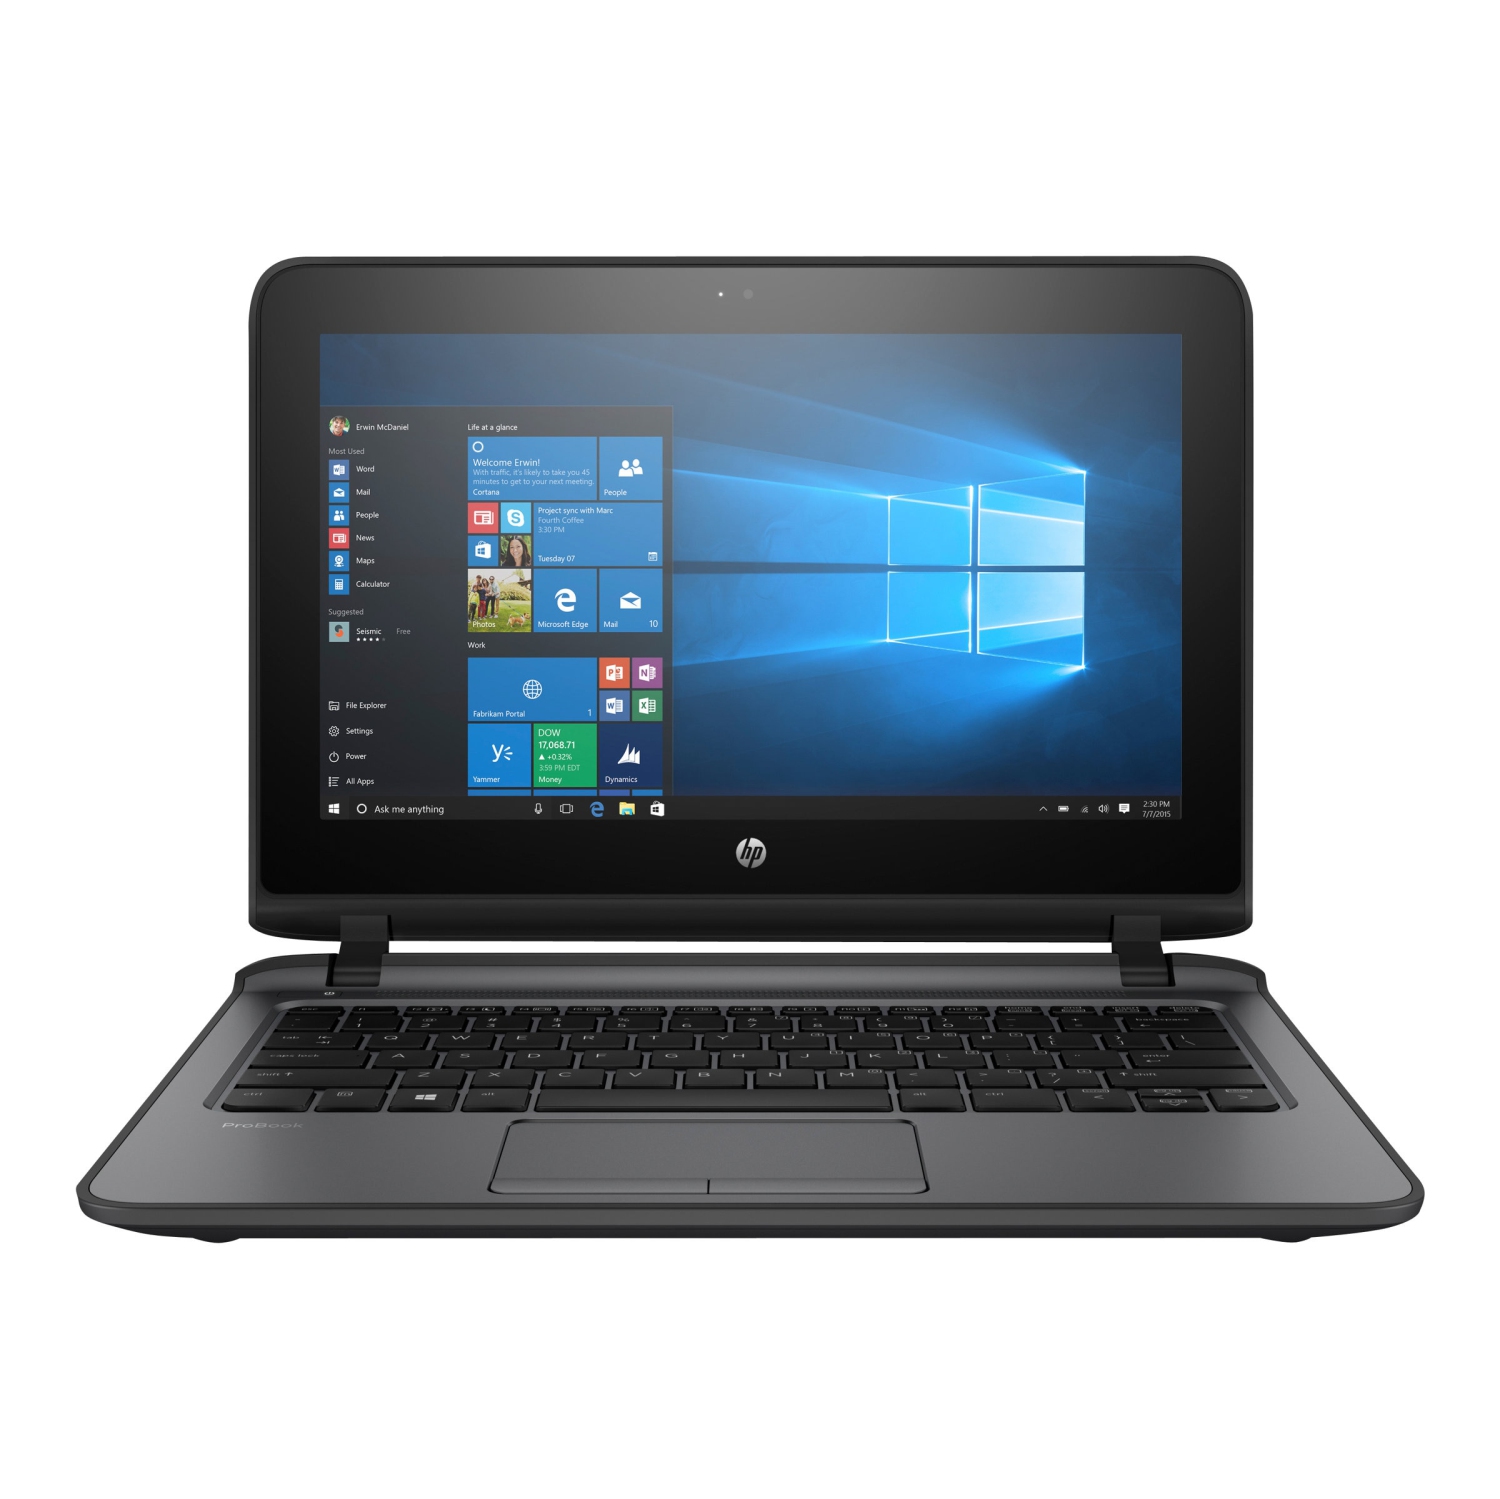 Refurbished (Good) - HP Probook 11 EE G2 11.6" Laptop - Intel Celeron N3855U @ 1.6 GHz, 4GB DDR4, 128GB SSD, Windows 10 Home *Refurbished*